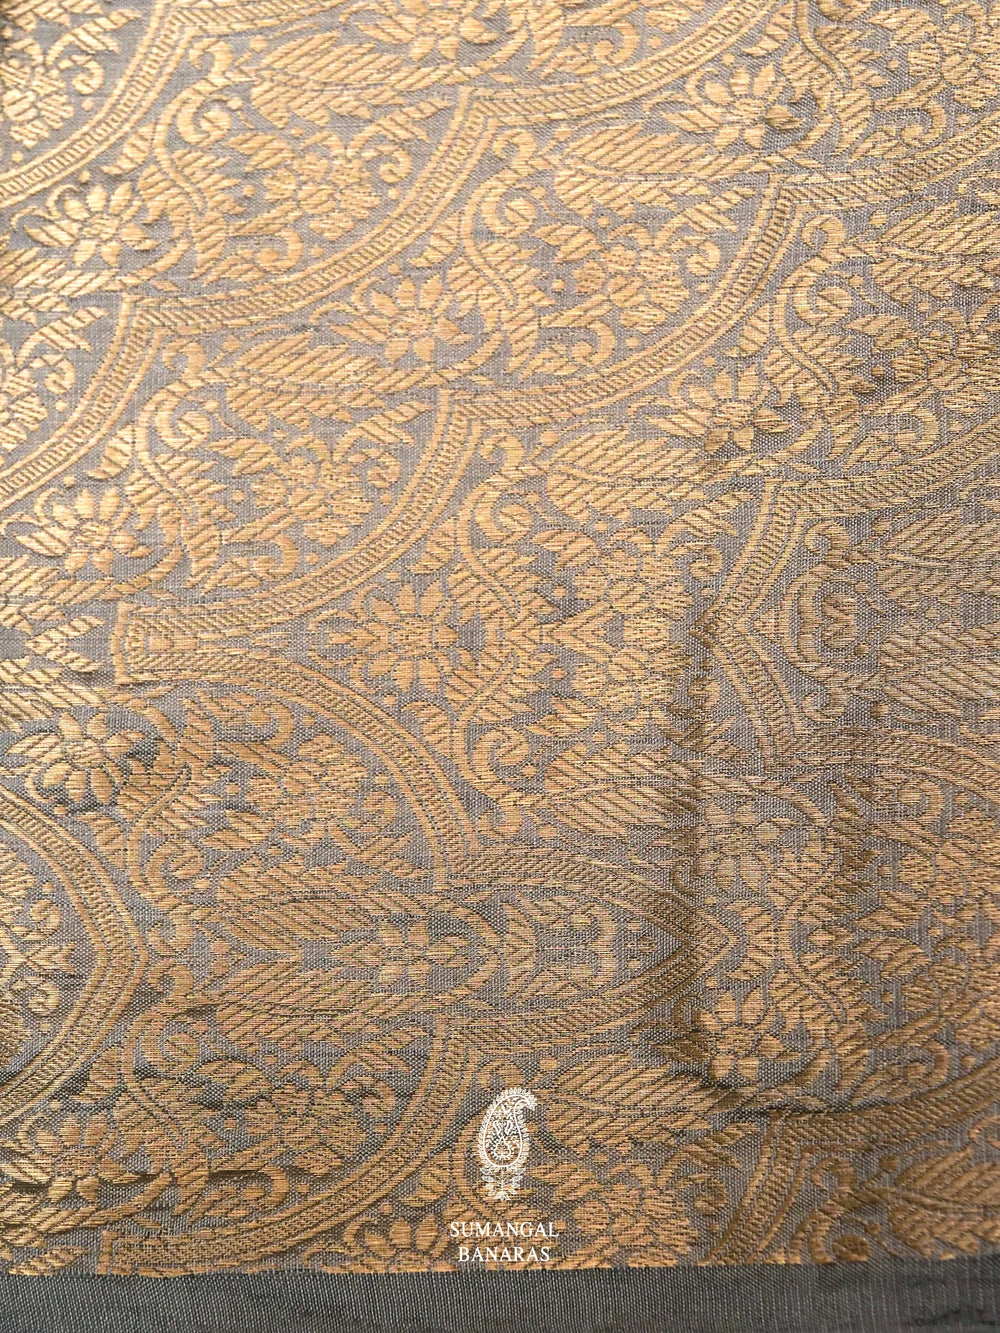 Handwoven Banarasi Grey Tissue Saree